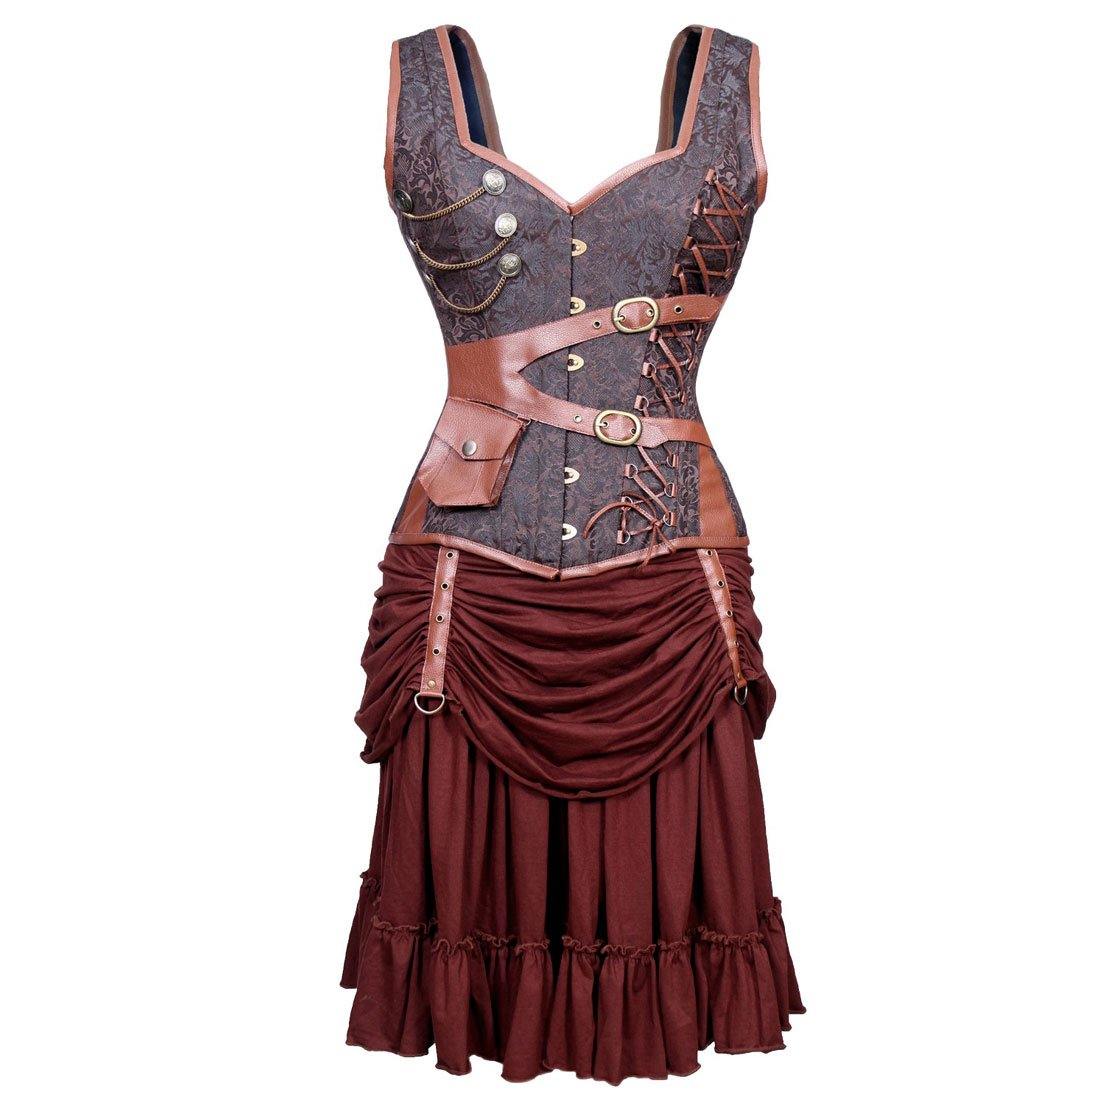 Naamah Steampunk Authentic Steel Boned Overbust Corset Dress - Corset Revolution